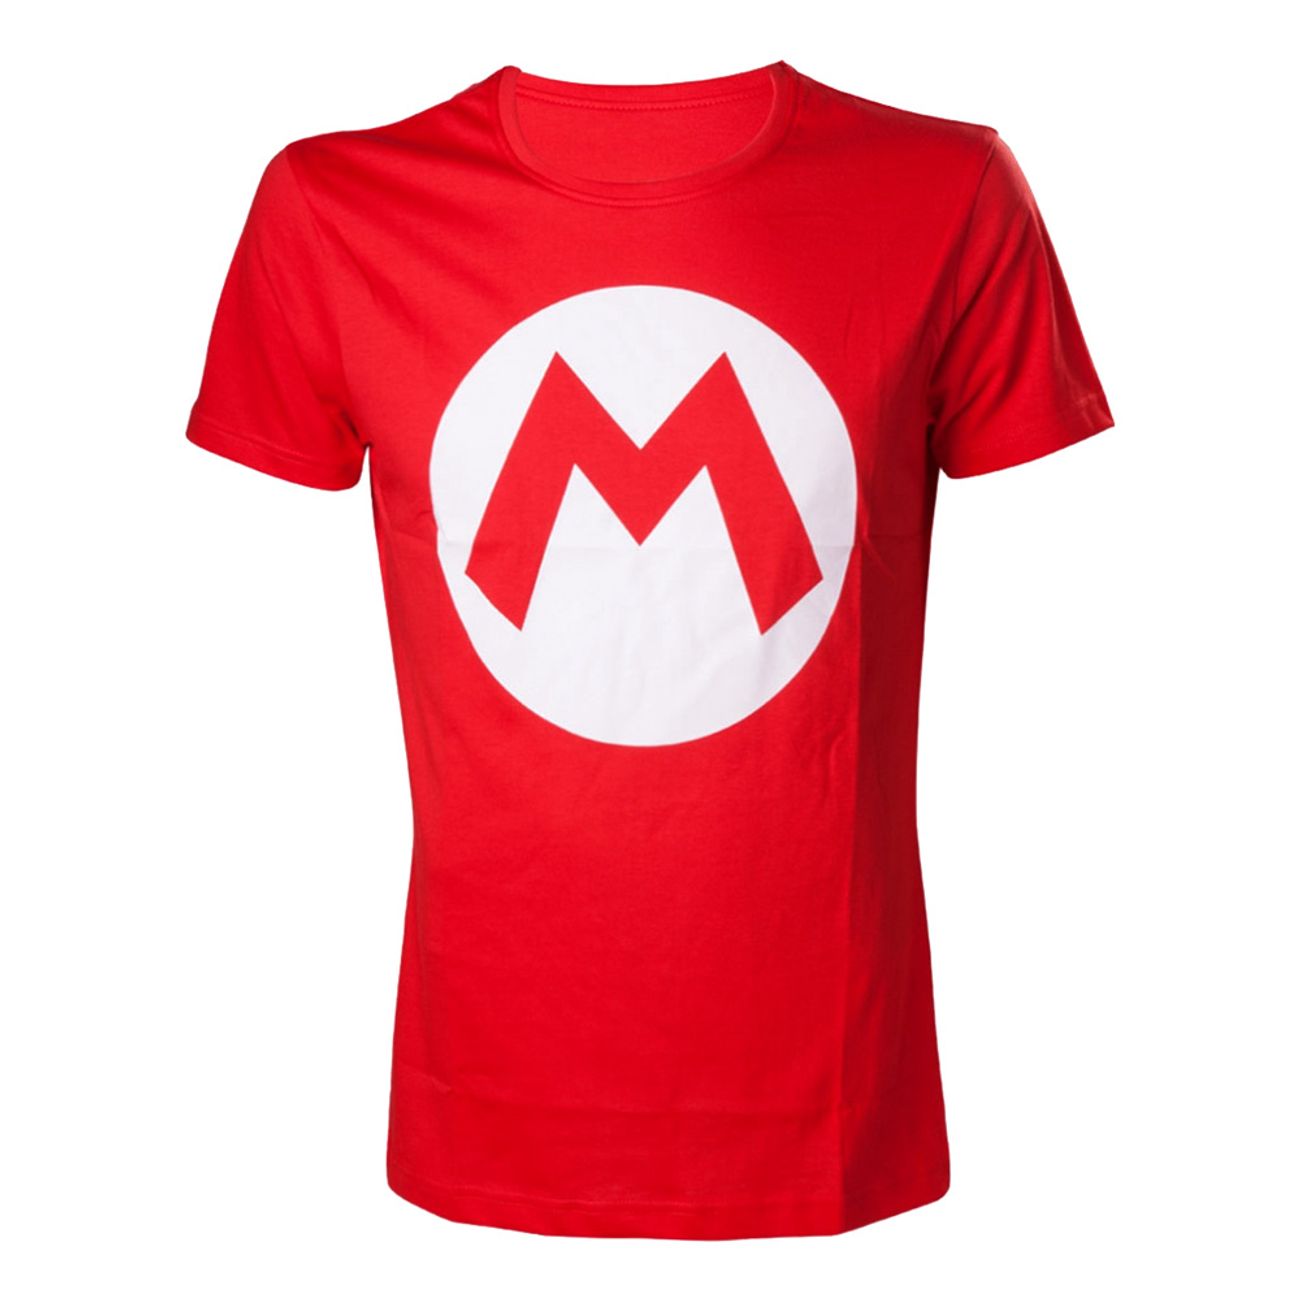 super-mario-logo-t-shirt-1